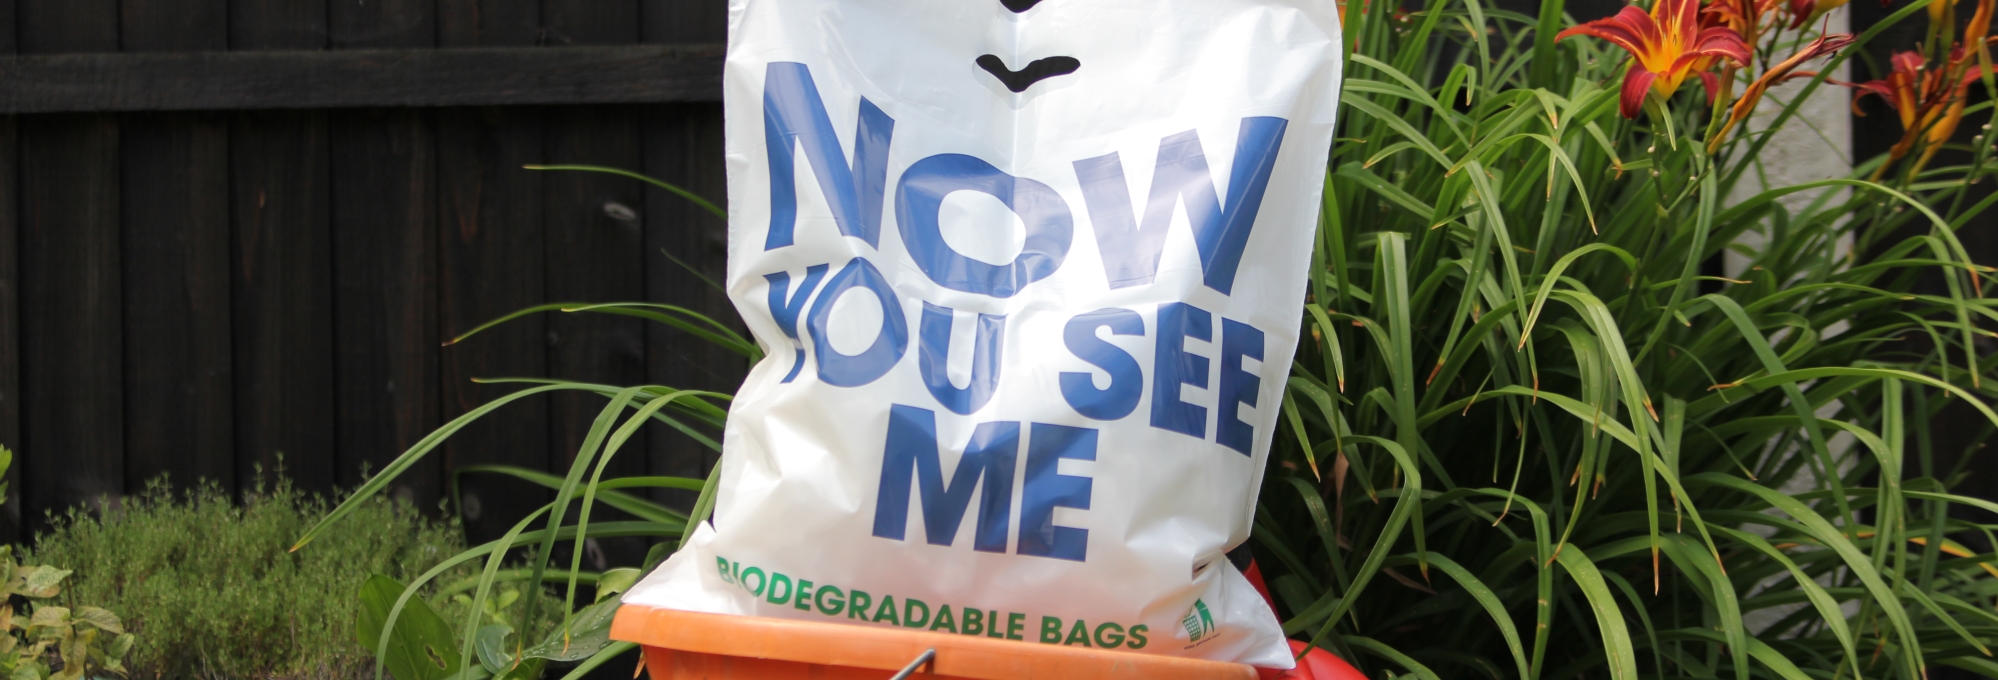 Bio-additive carrier bag